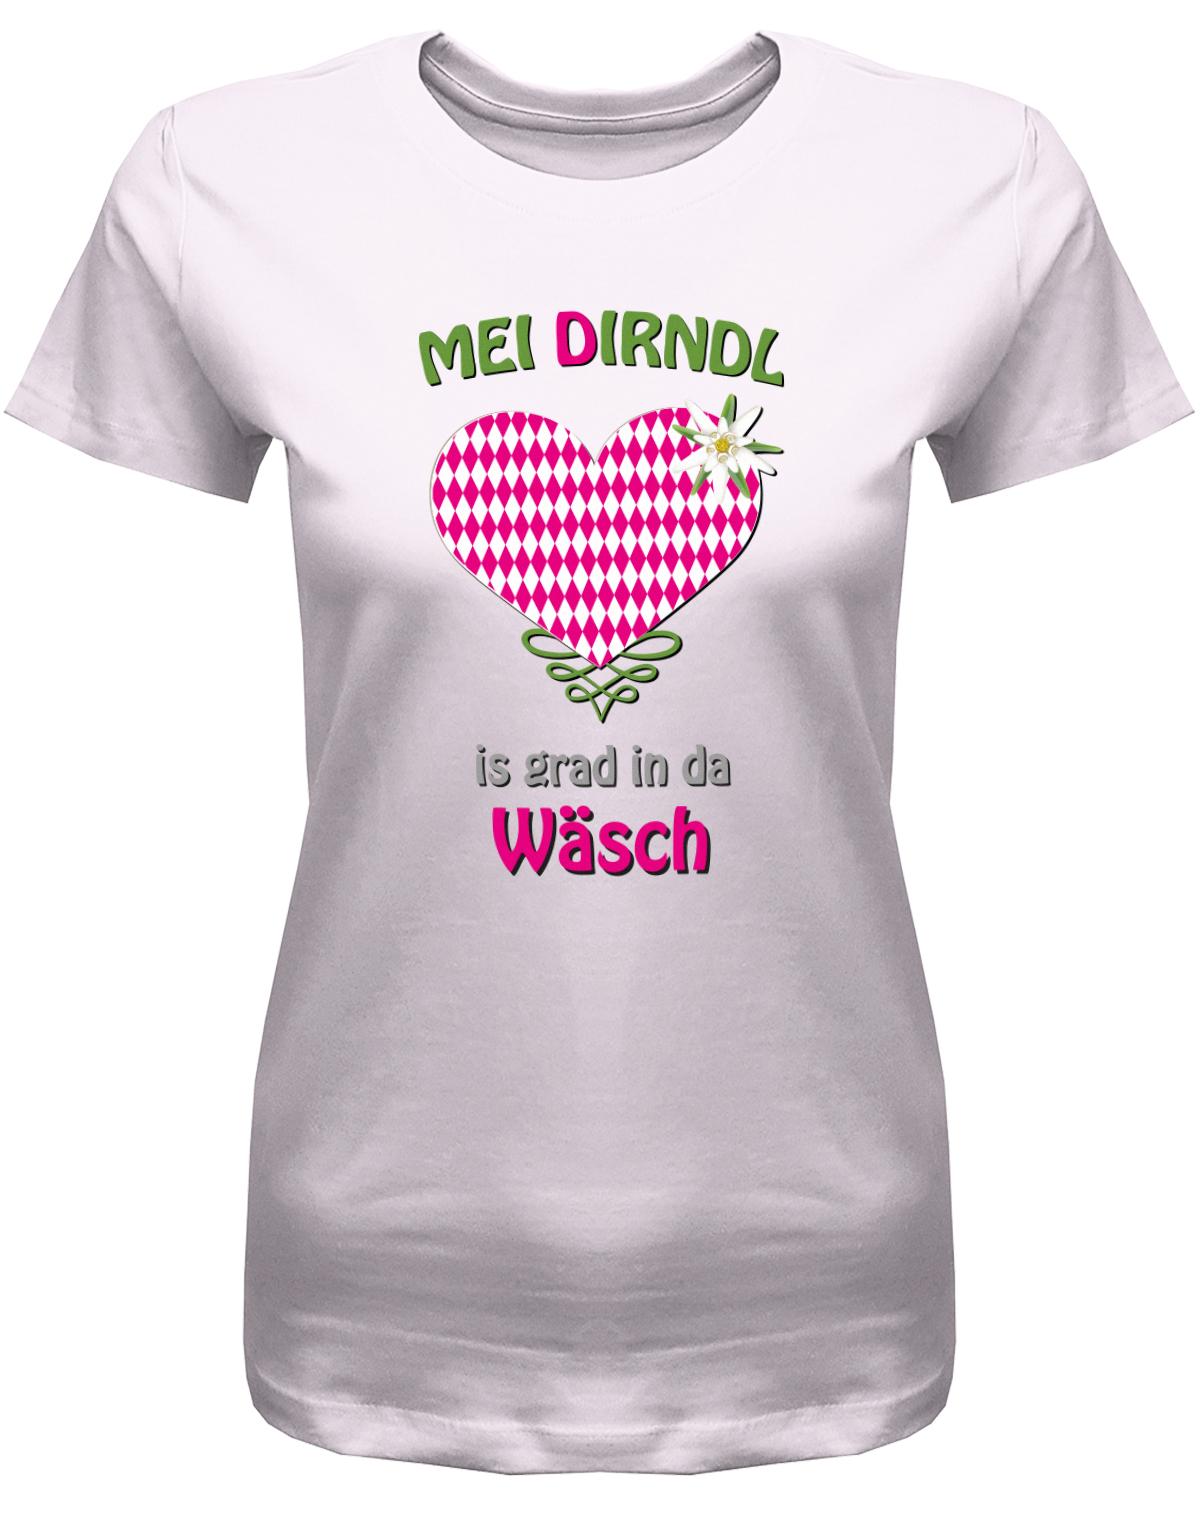 Mei-Dirndl-is-grad-in-da-w-sch-damen-shirt-rosa